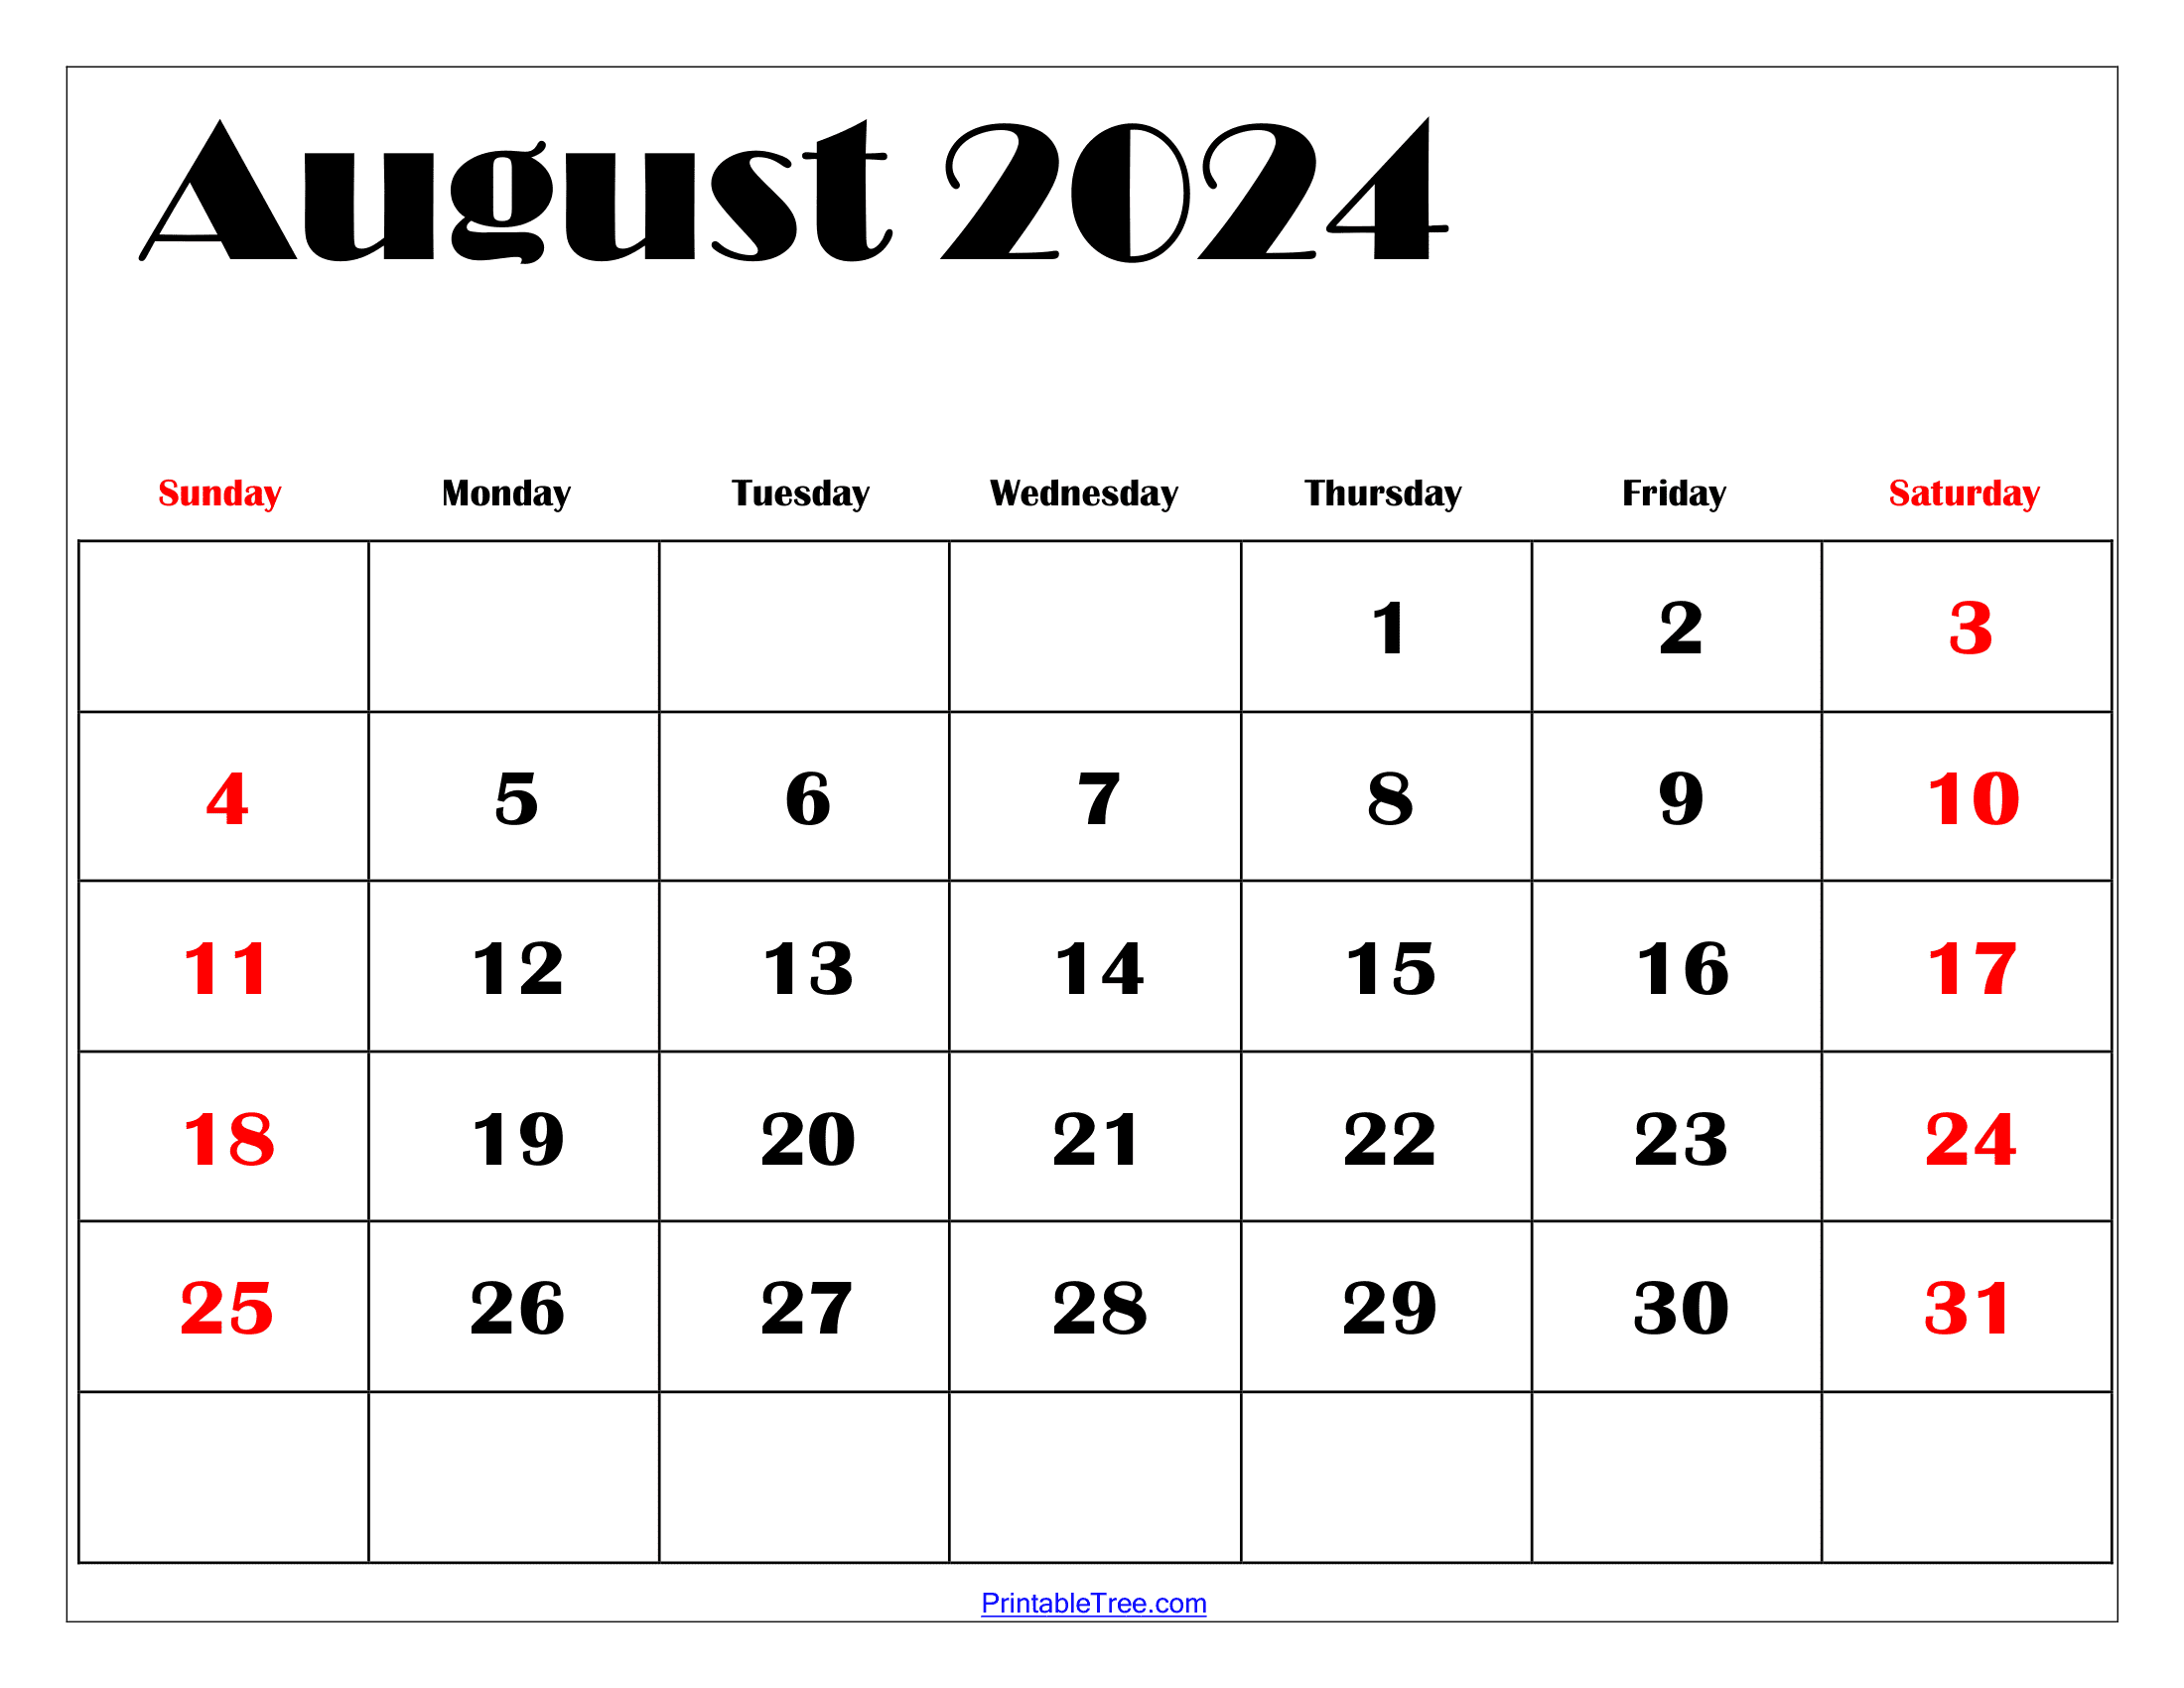 August 2024 Calendar Printable Pdf Templates Free Download regarding Free Printable Calendar 2024 November December